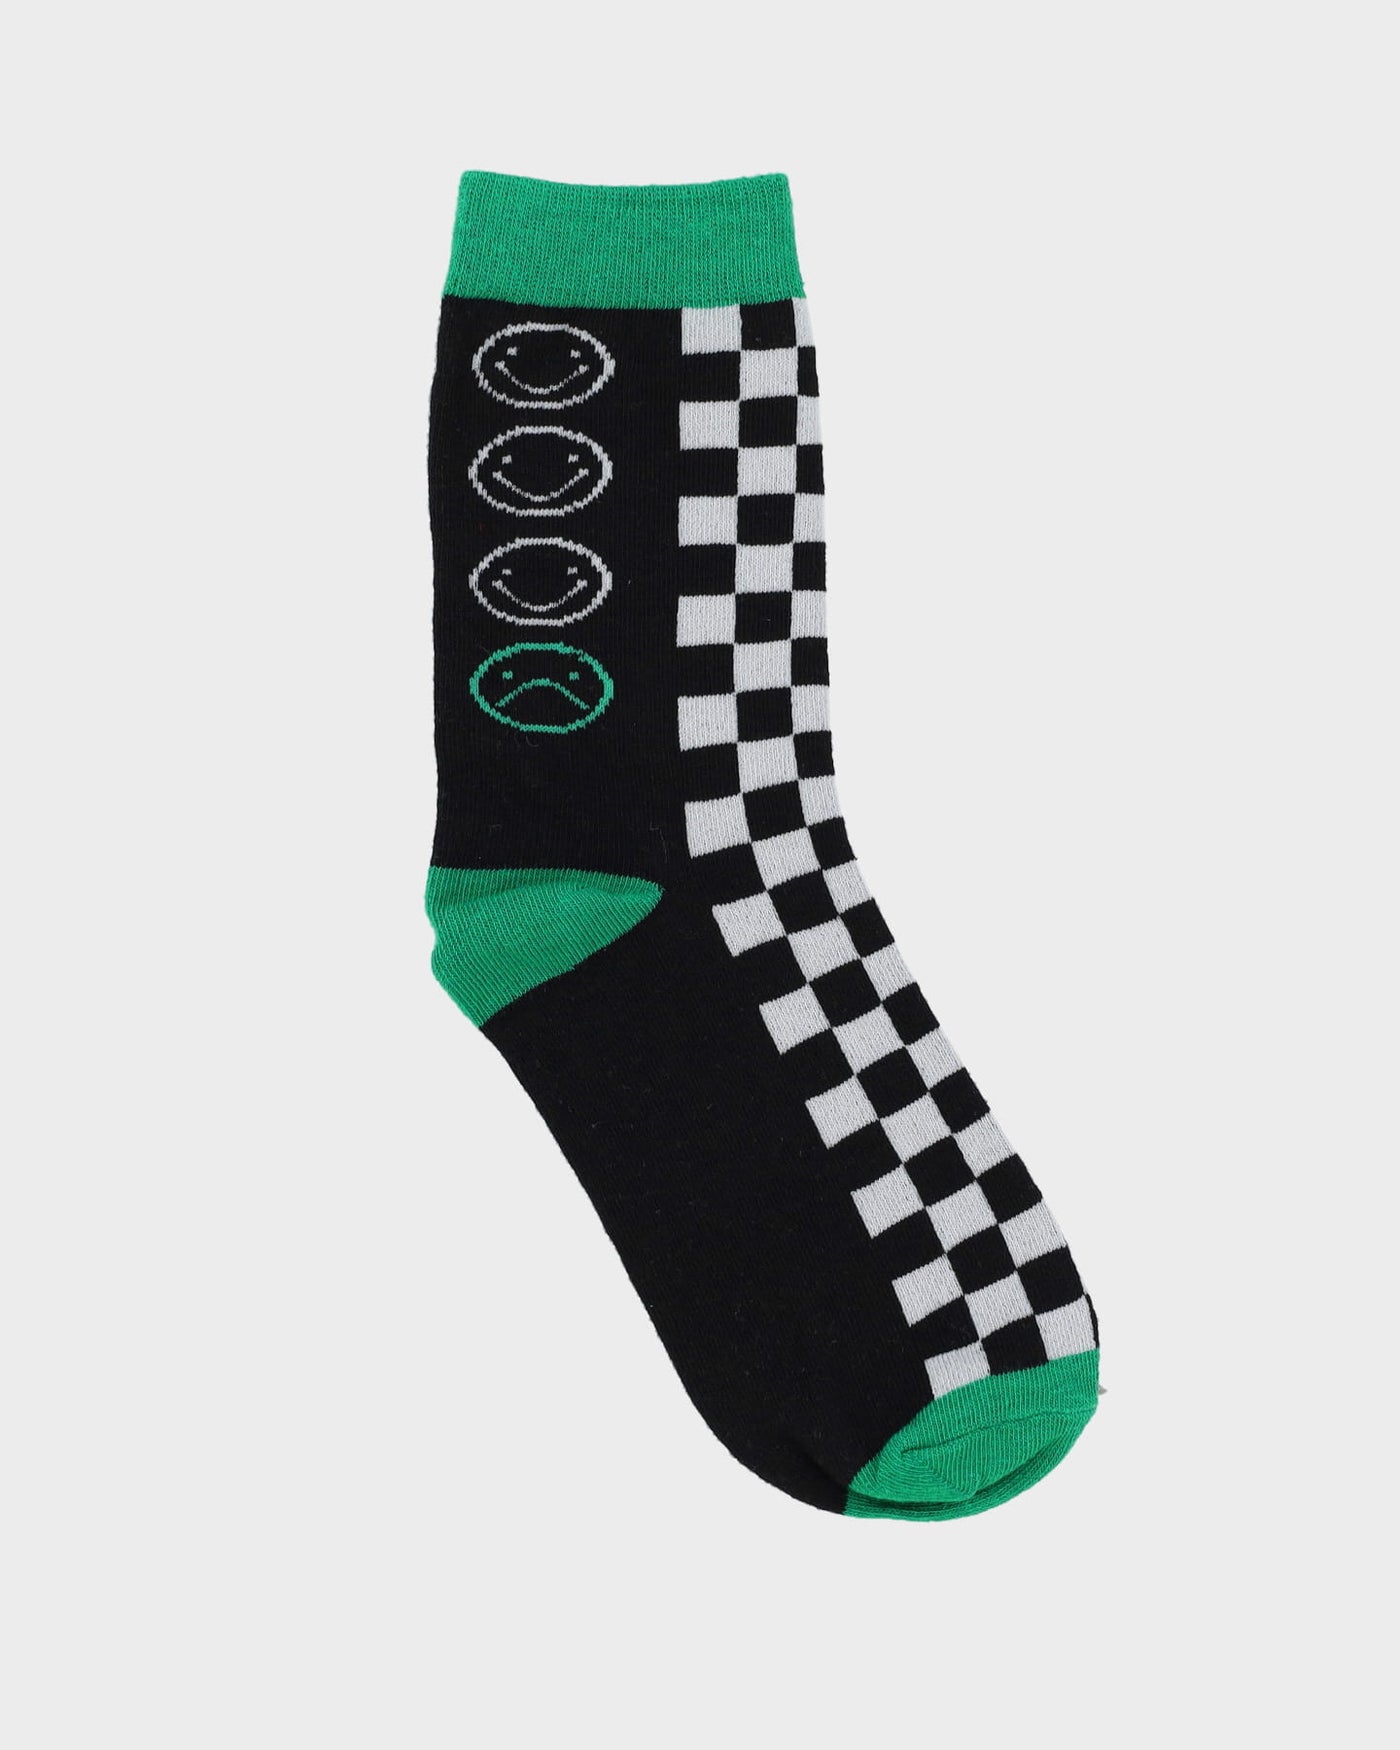 Smiley Black / Green Checkerboard Patterned Socks